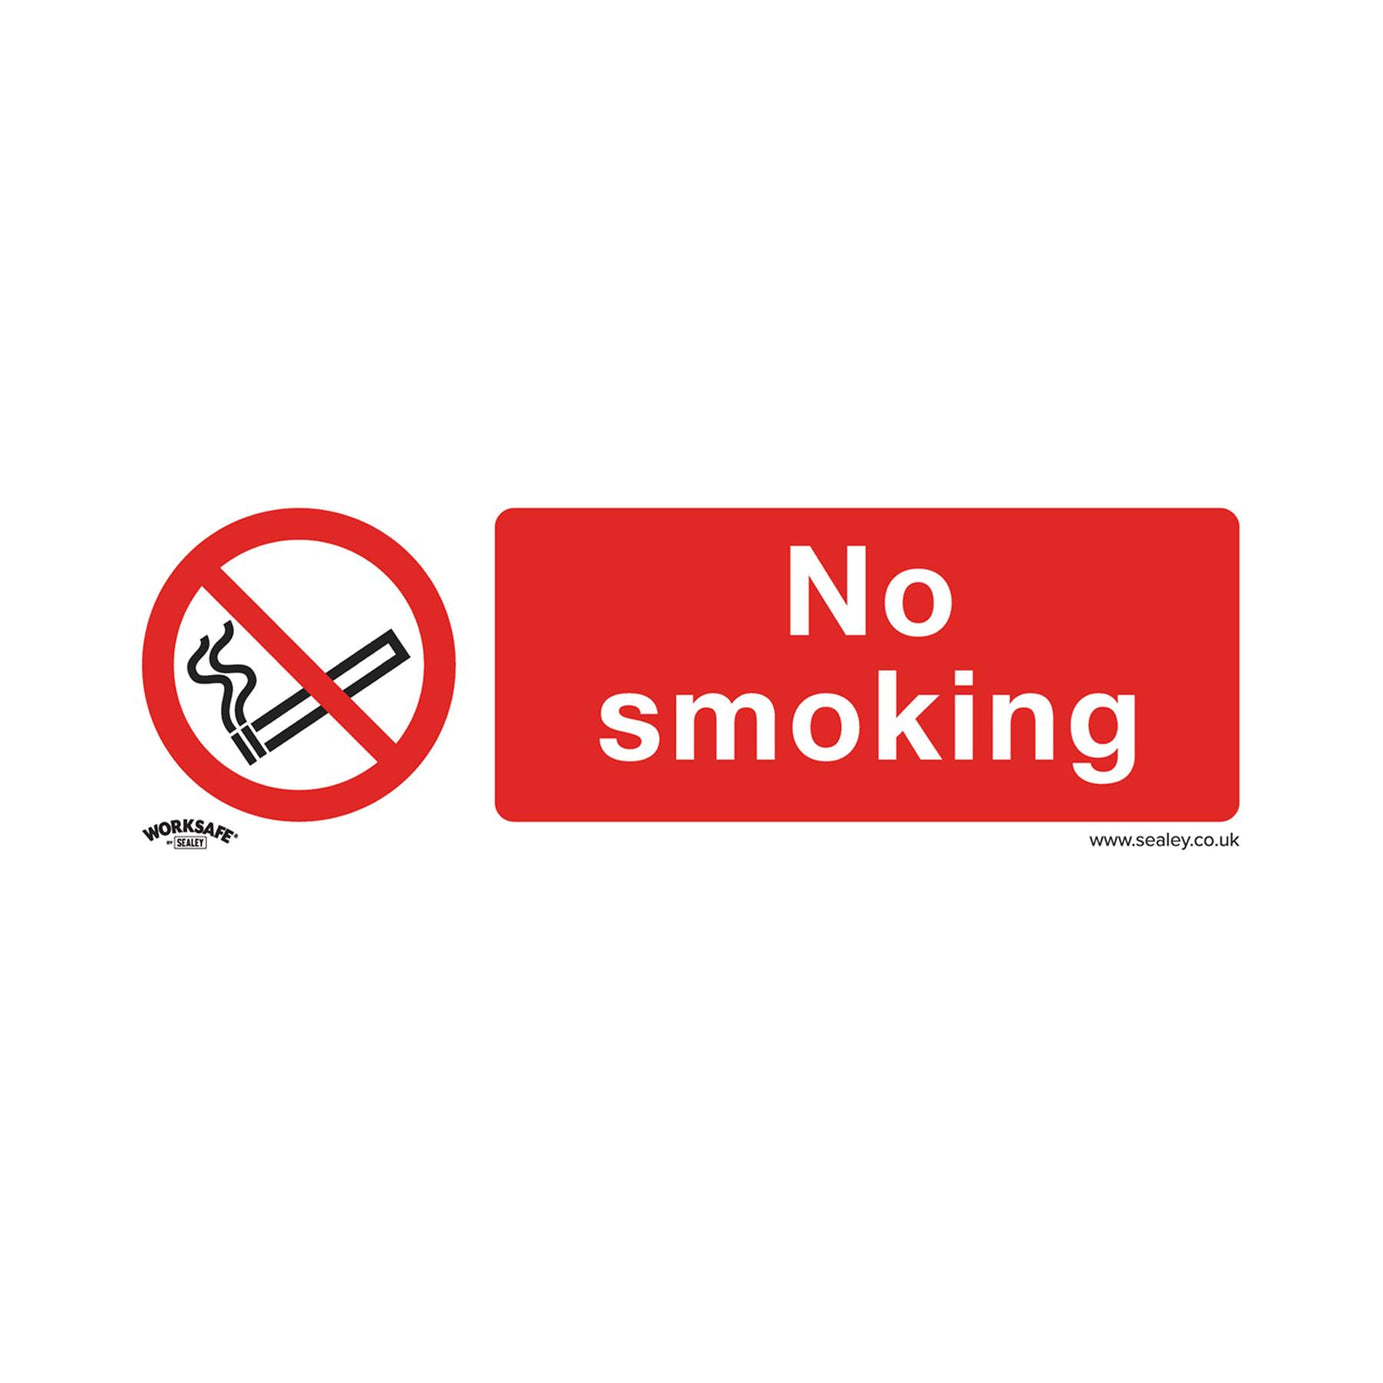 Prohibition Safety Sign - No Smoking - Rigid Plastic